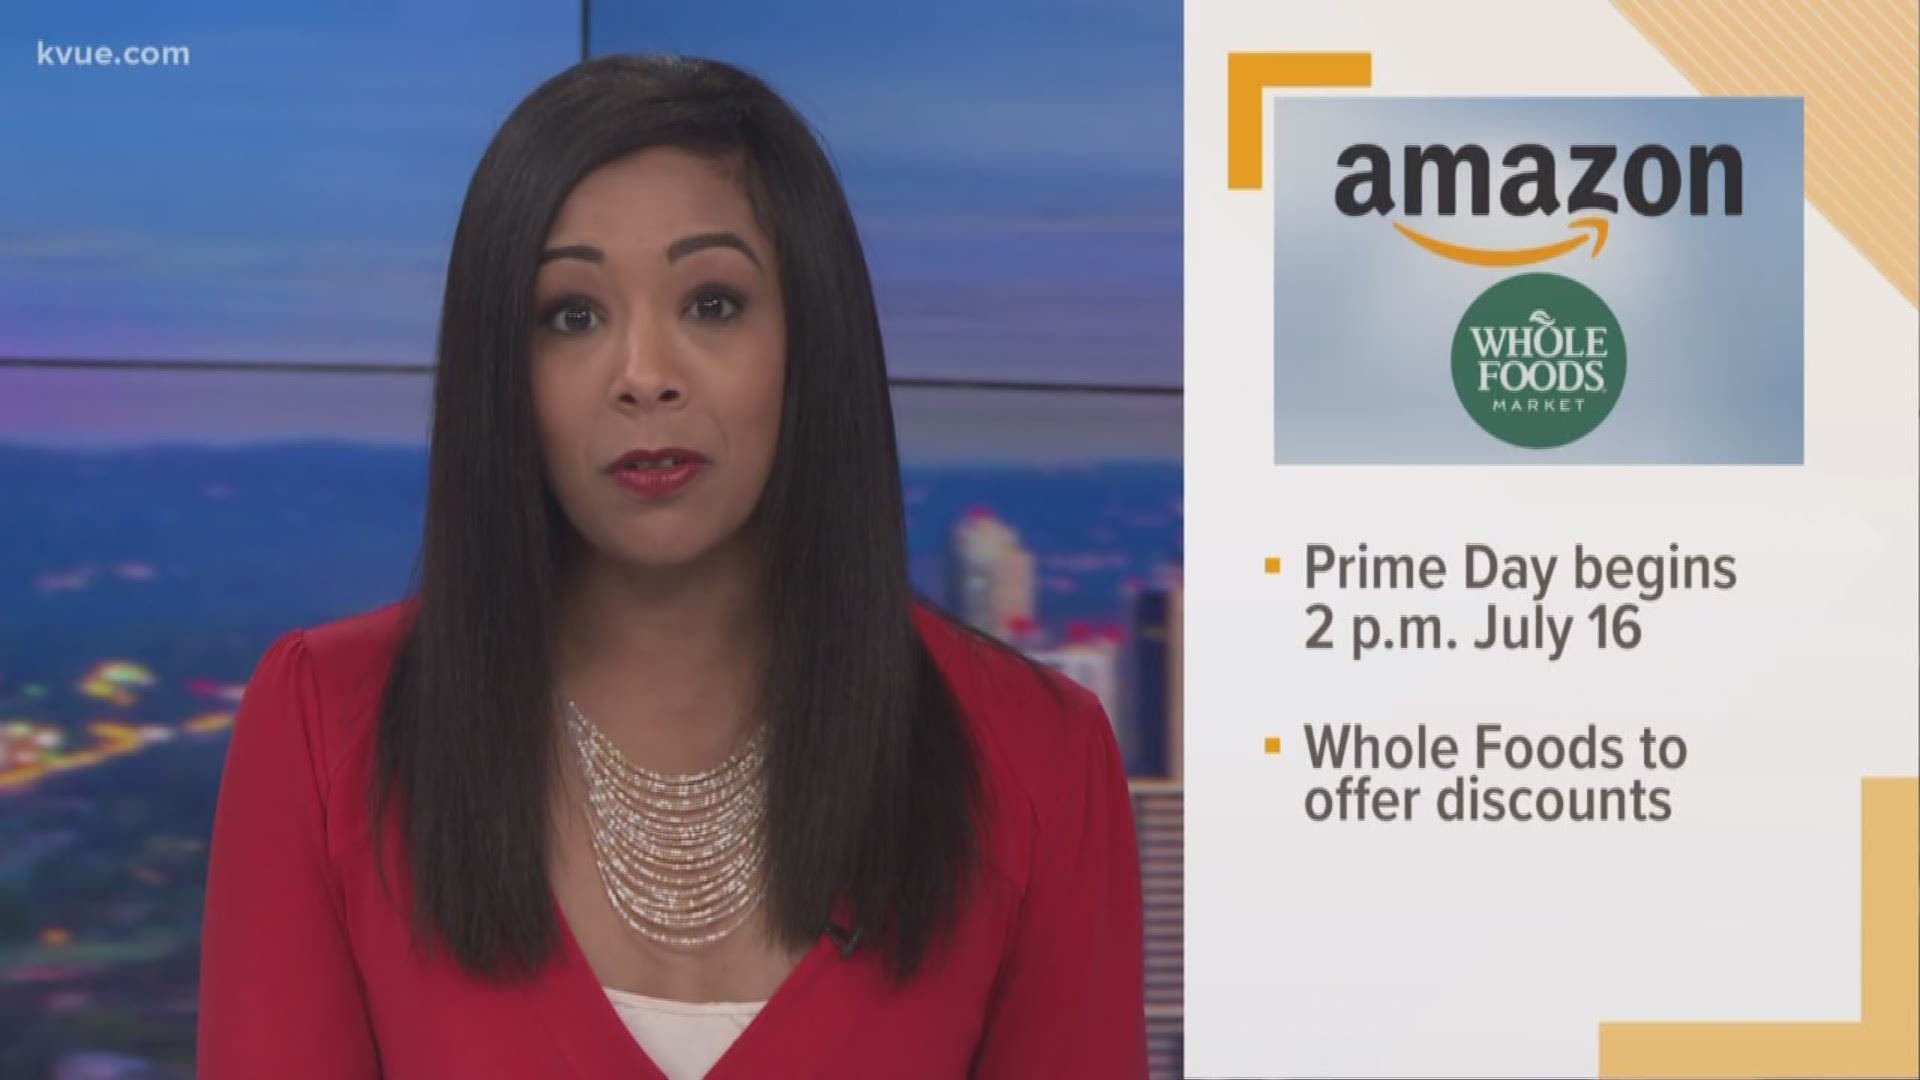 Amazon Prime Day starts on July 16